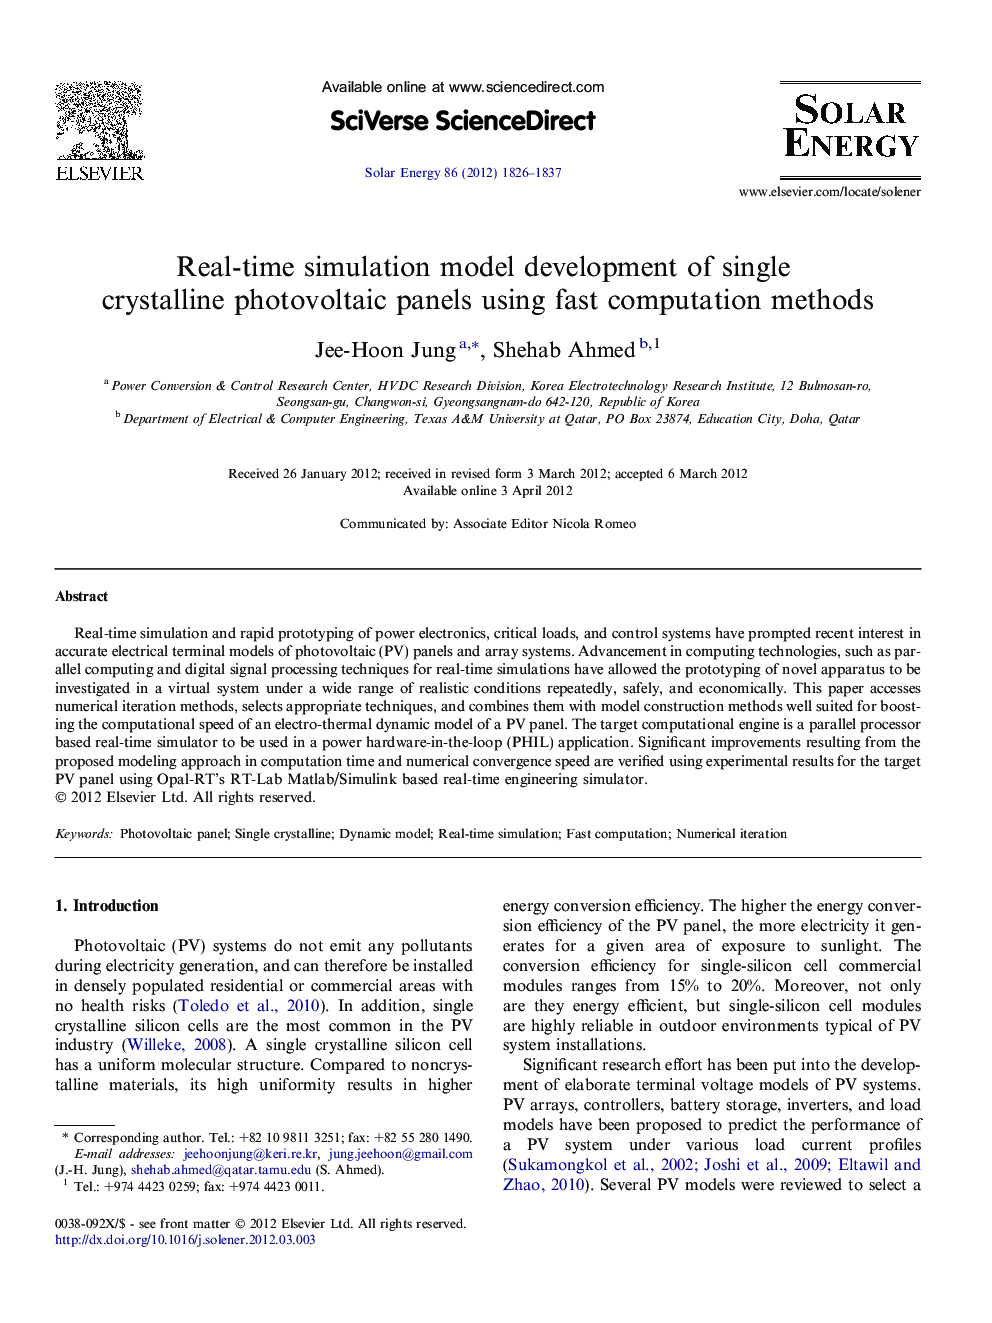 Real-time simulation model development of single crystalline photovoltaic panels using fast computation methods